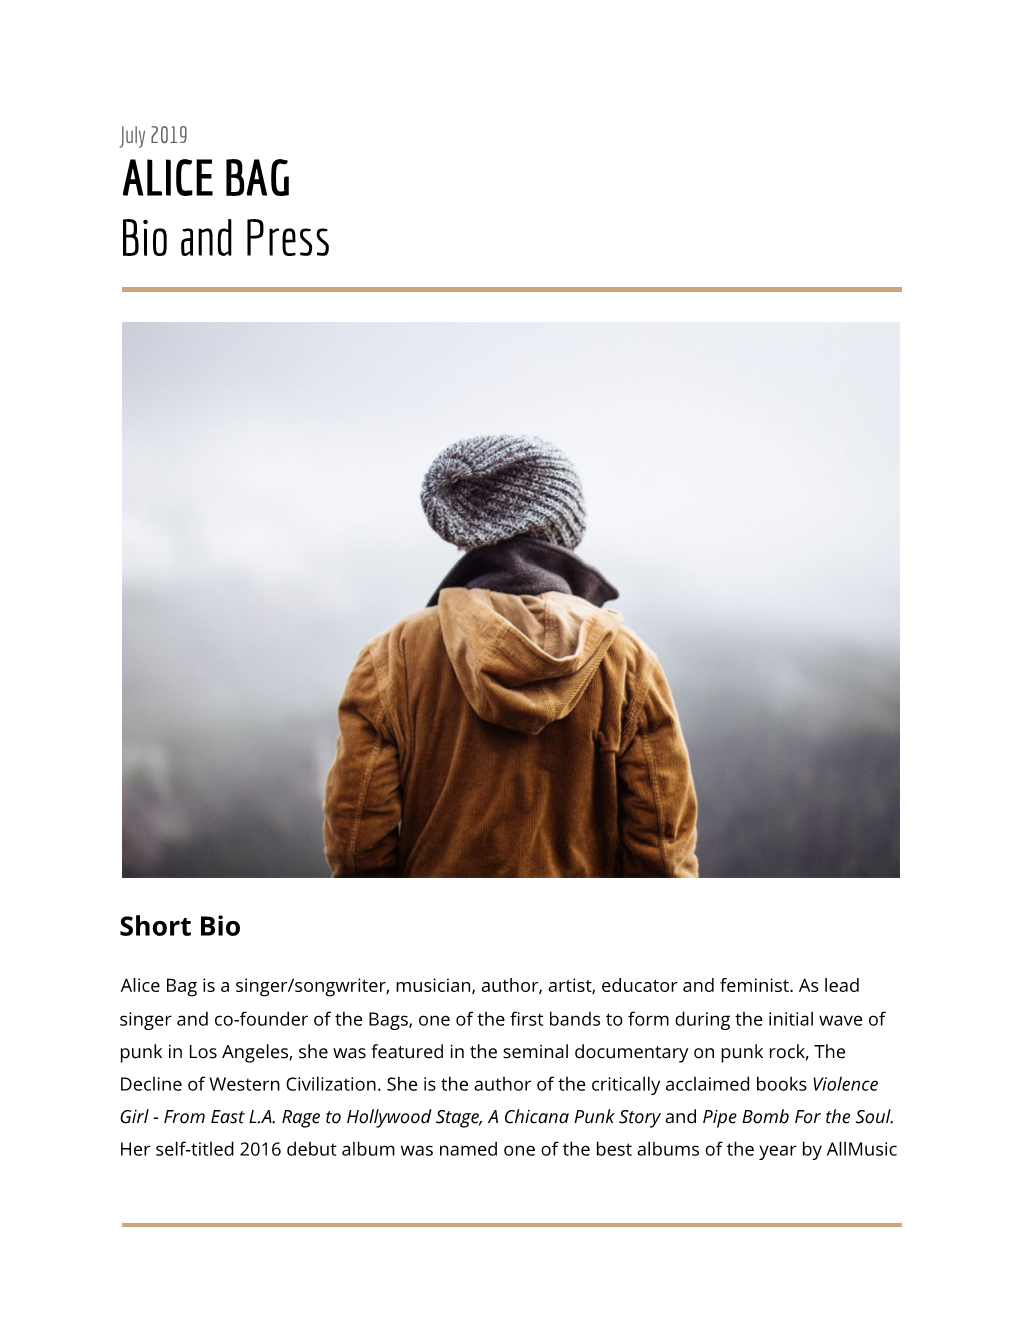 ALICE BAG Bio and Press